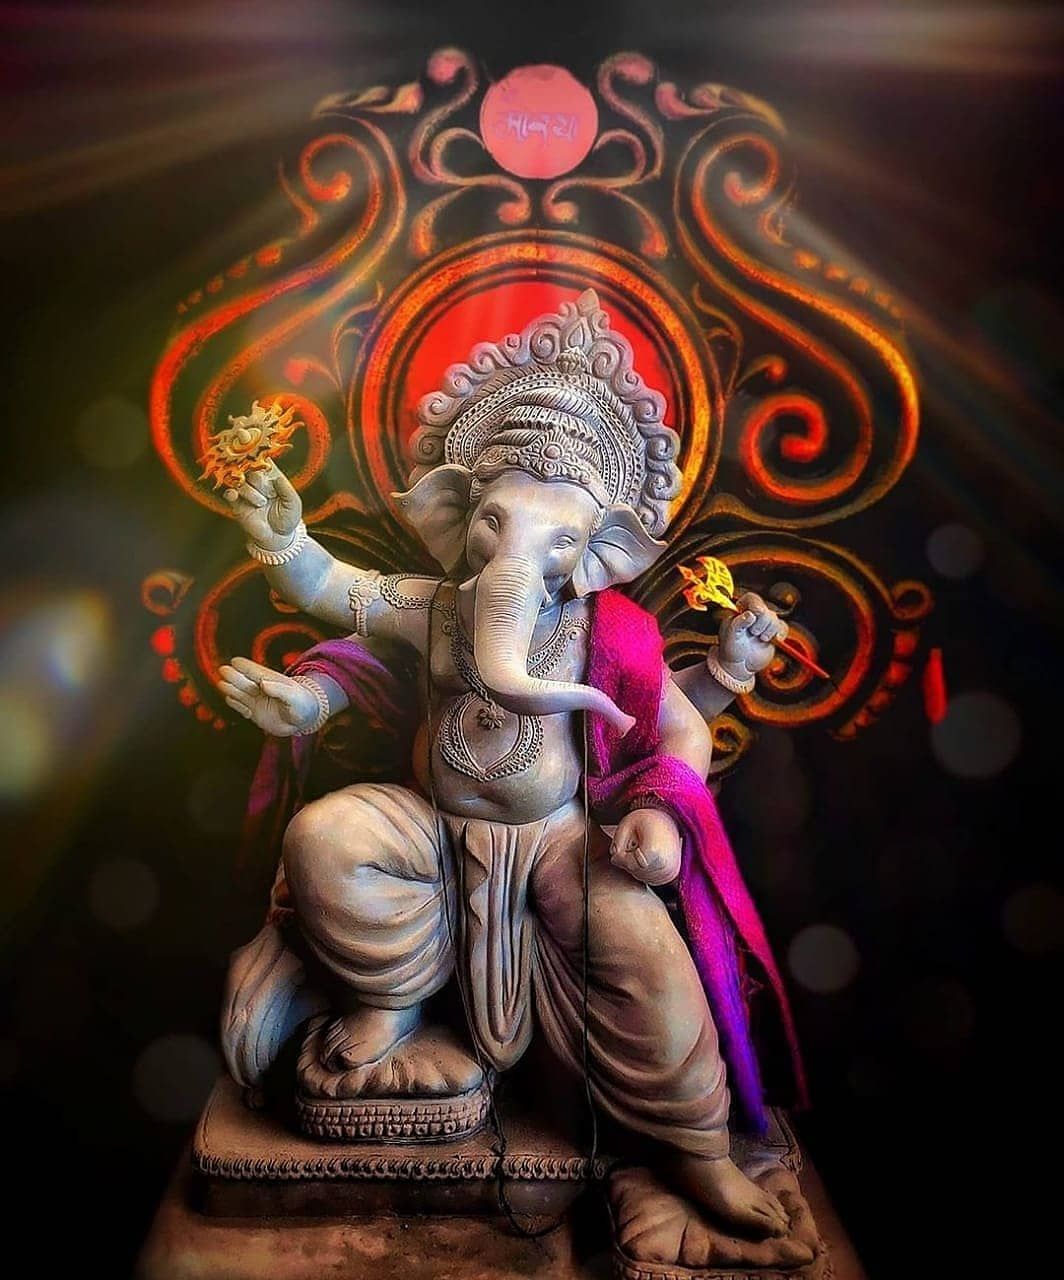 Mumbai Ganesha® On Instagram: “#Mumbai_Ganesha . @Mumbai_Ganesha . Mumbai Ganesha . #Maharashtra #Mumbai #Mumbai_Ig #Tejukayacharaja #Chinchpoklichachintamani…”